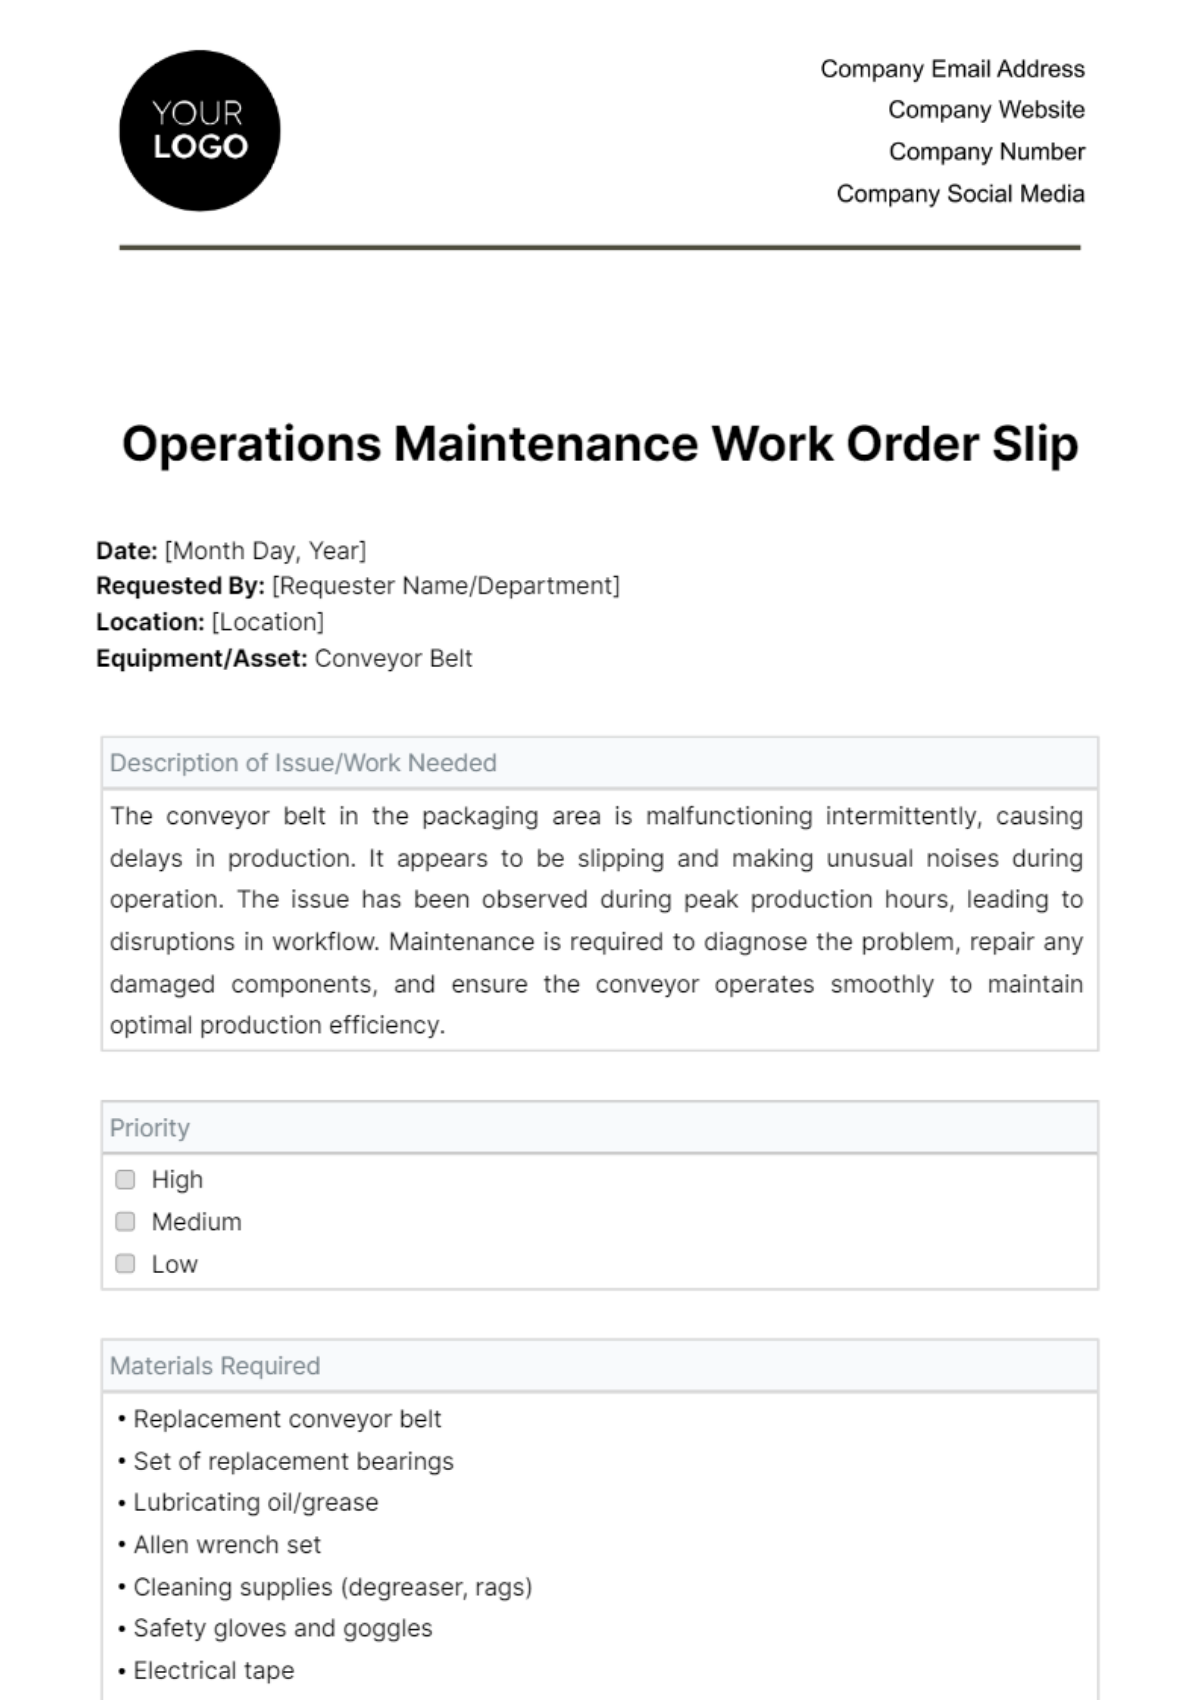 Free Operations Maintenance Work Order Slip Template